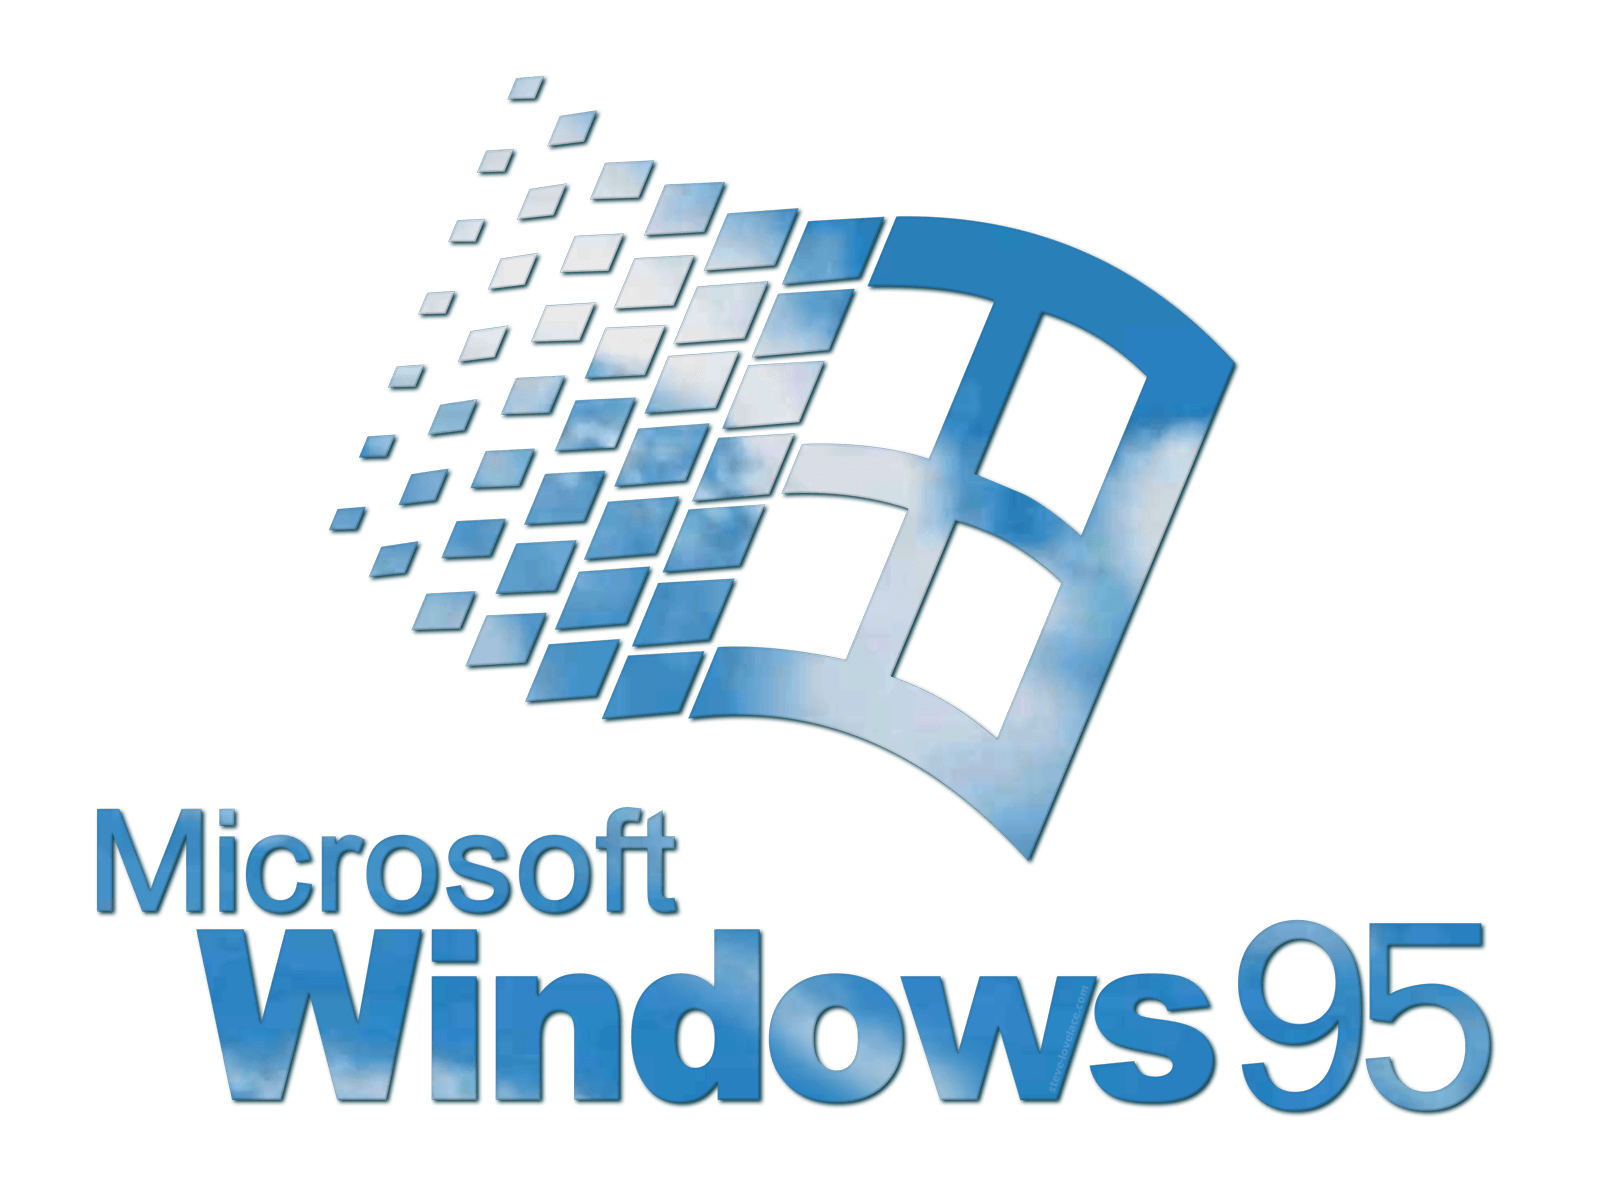 Microsoft Windows 95 Logo - Starting Up Windows 95 — Steve Lovelace